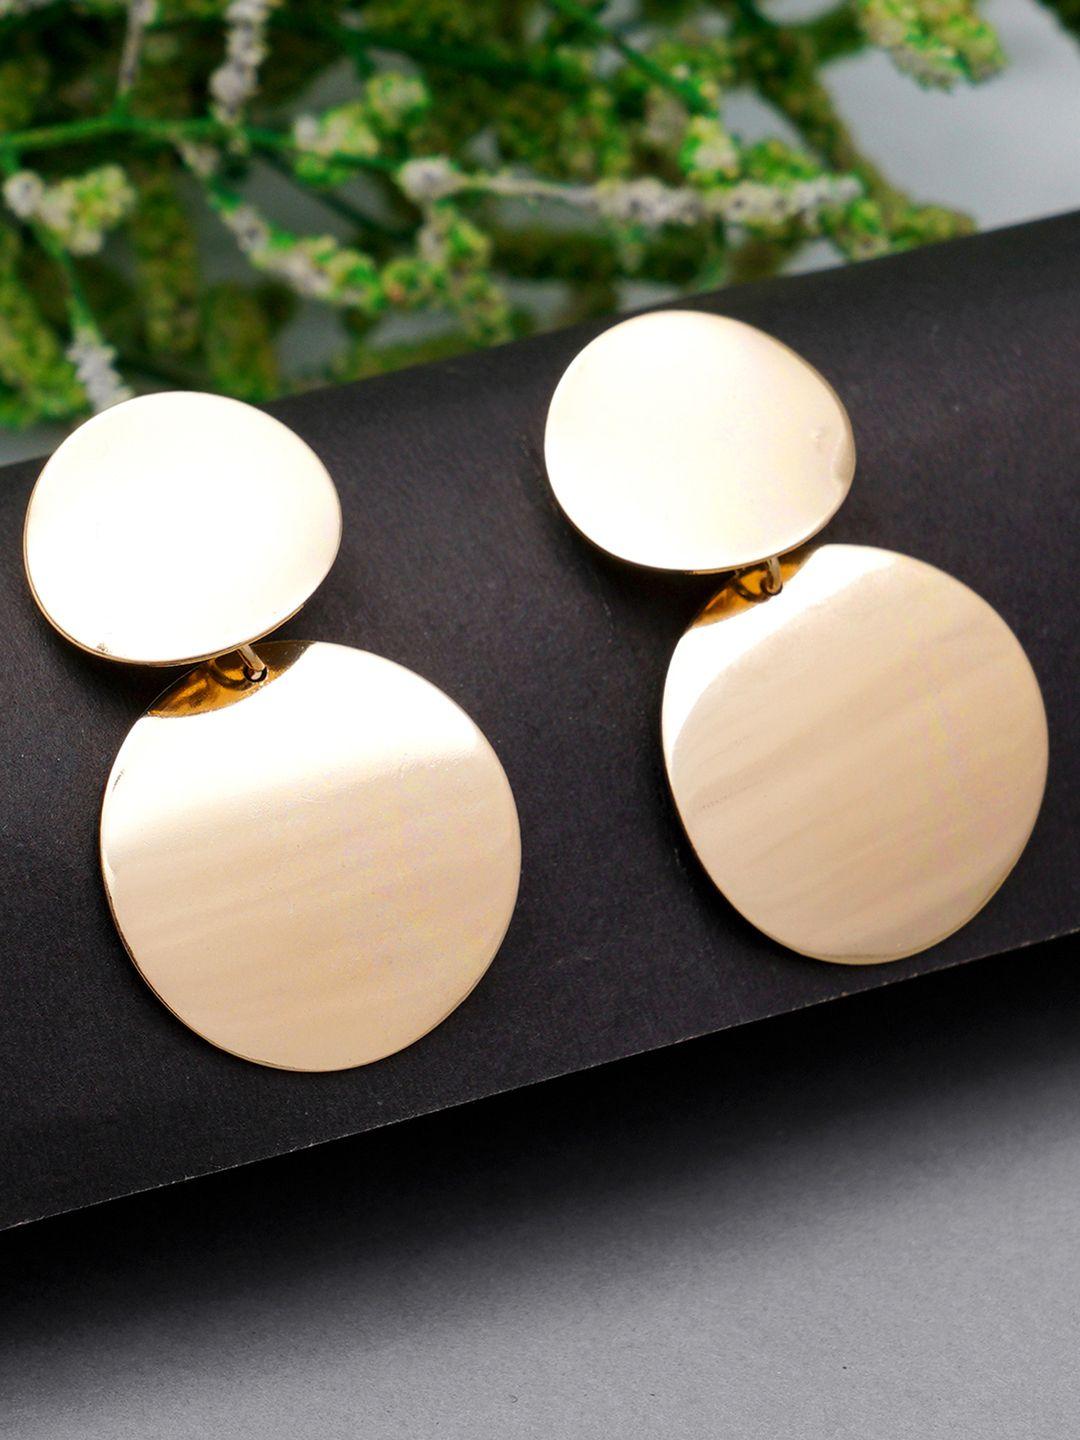 karatcart gold-toned classic drop earrings